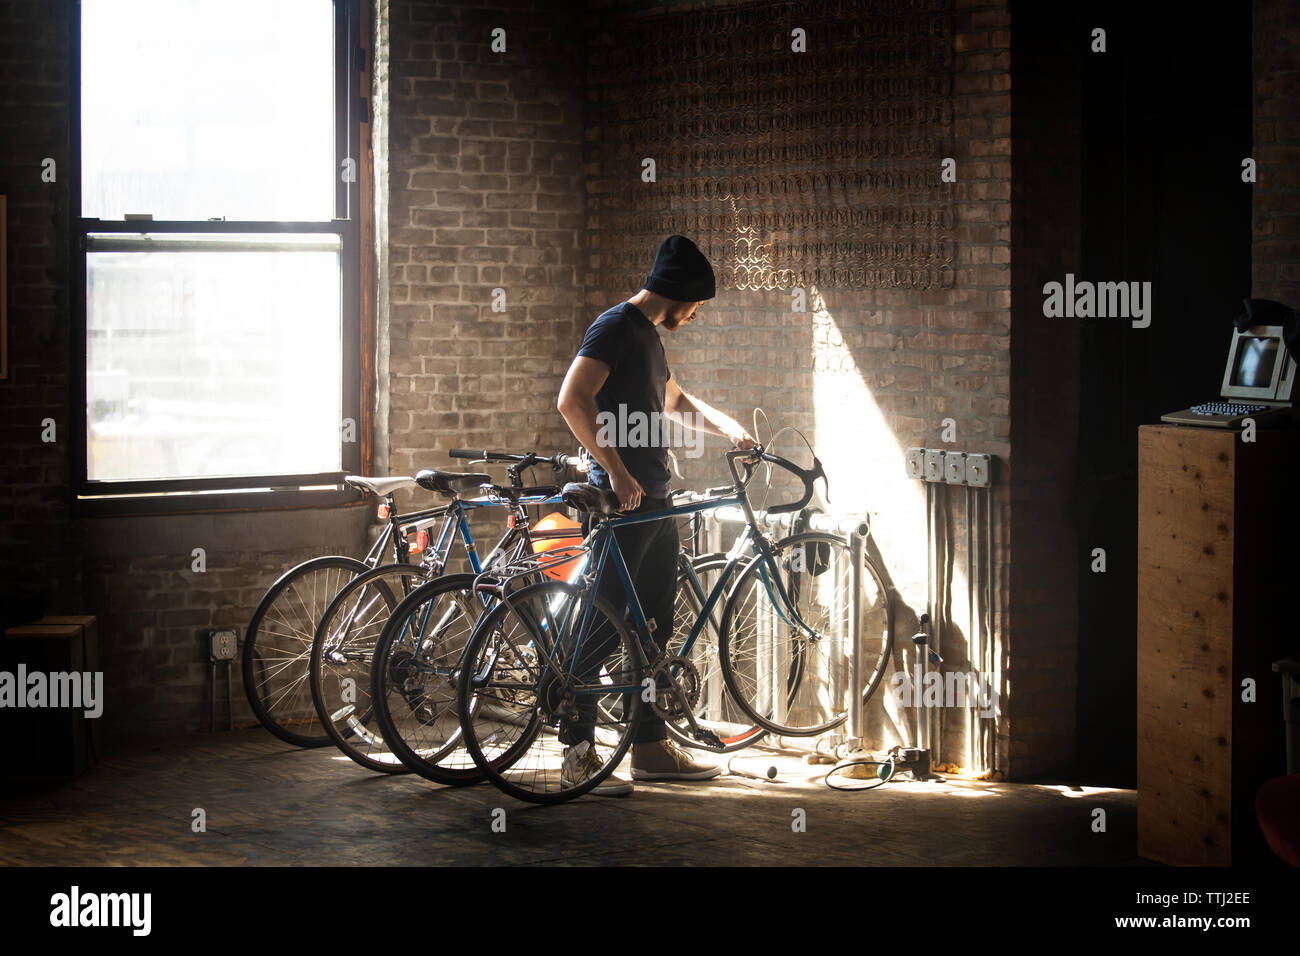 Man keeping bicycle in rack Stock Photo